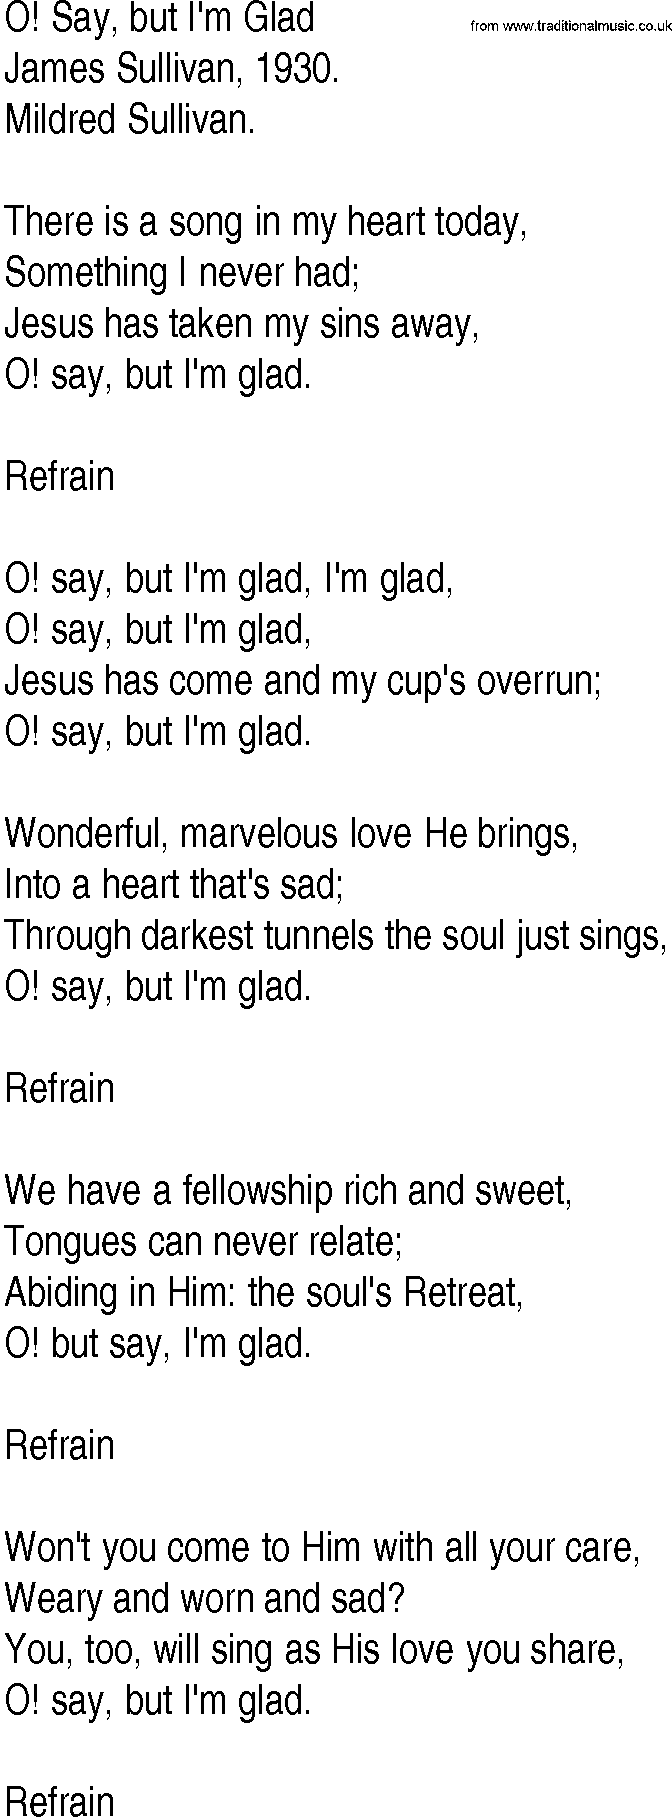 Hymn and Gospel Song: O! Say, but I'm Glad by James Sullivan lyrics